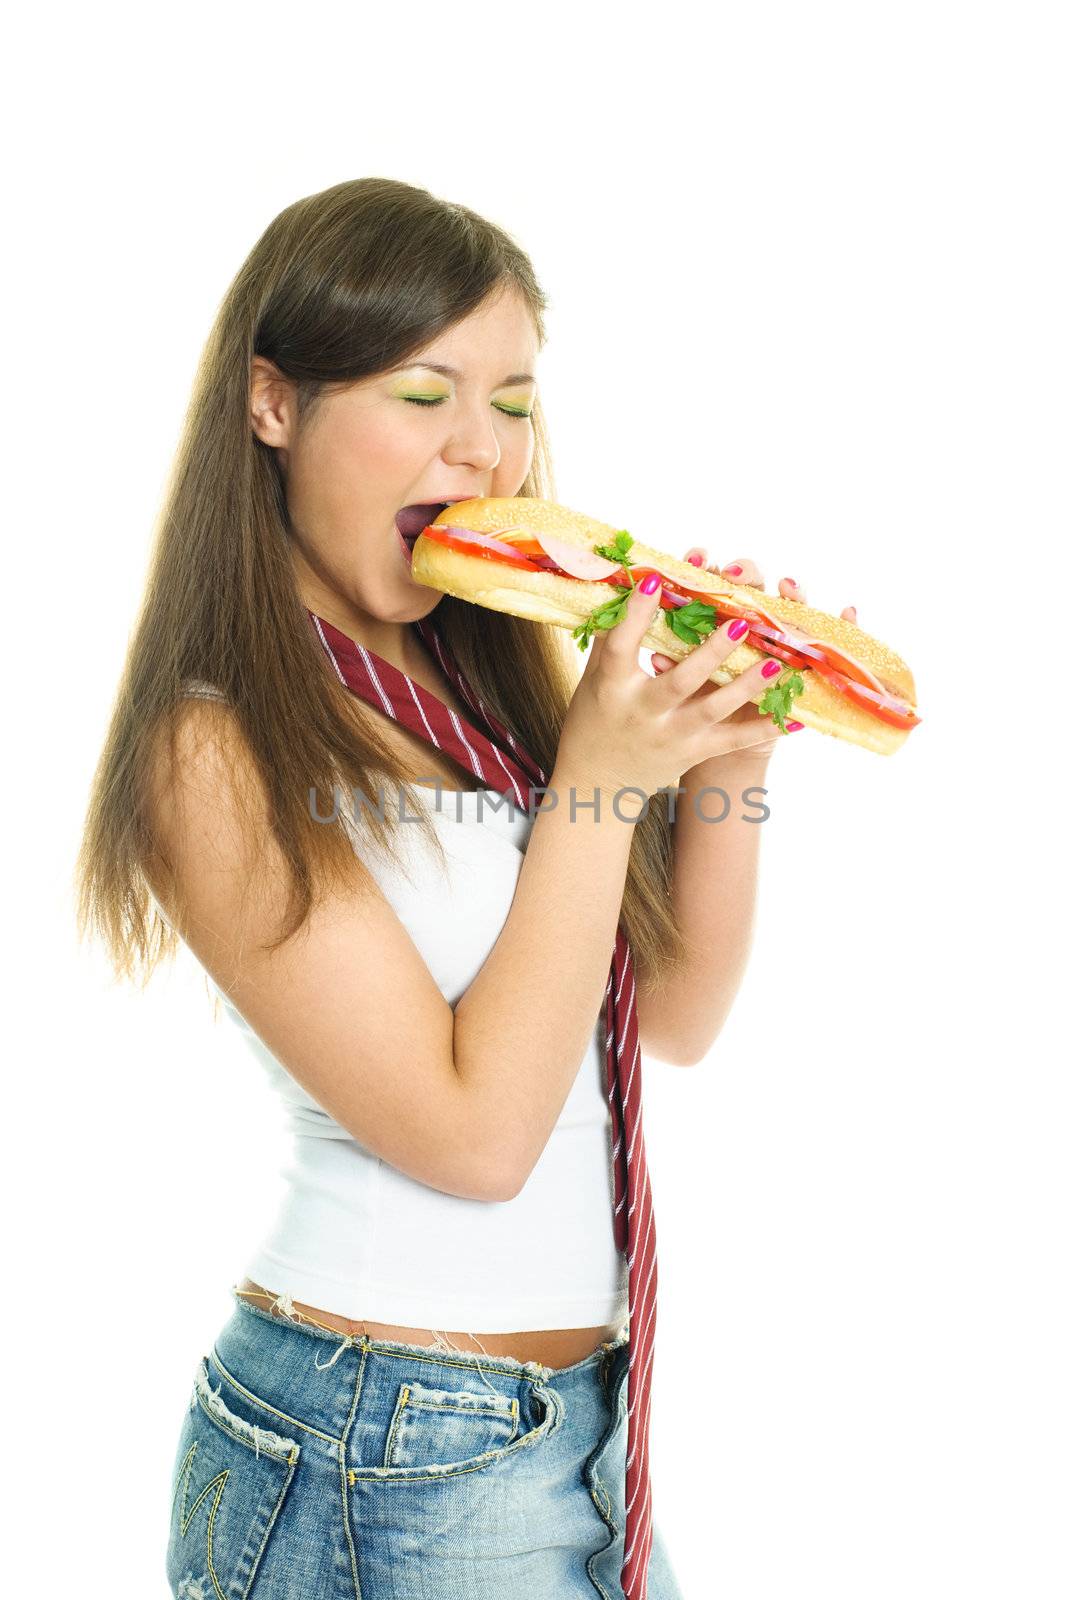 pretty girl eating a hamburger by lanak